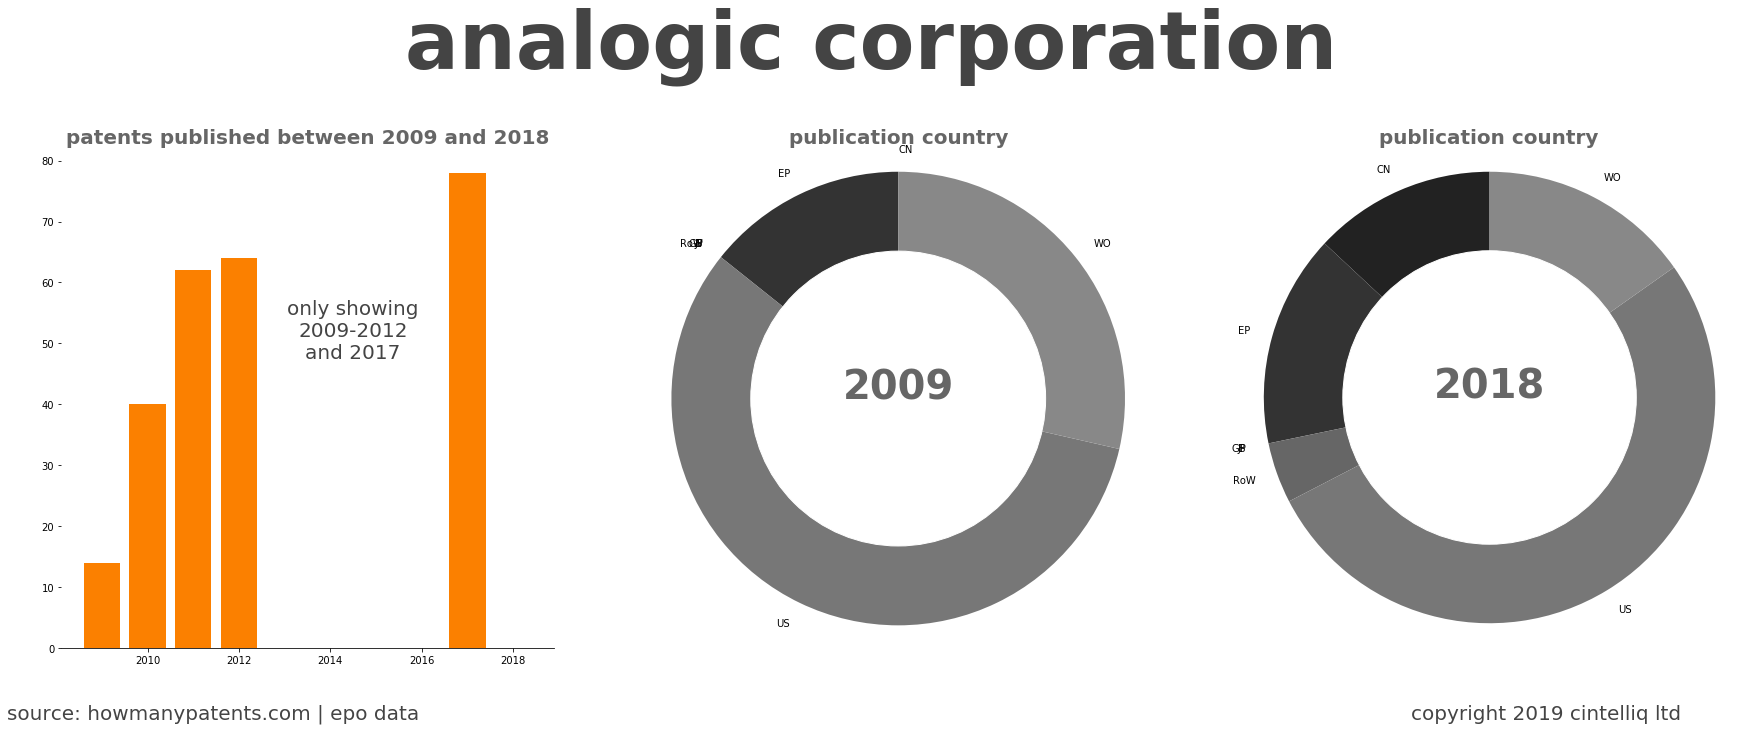 summary of patents for Analogic Corporation